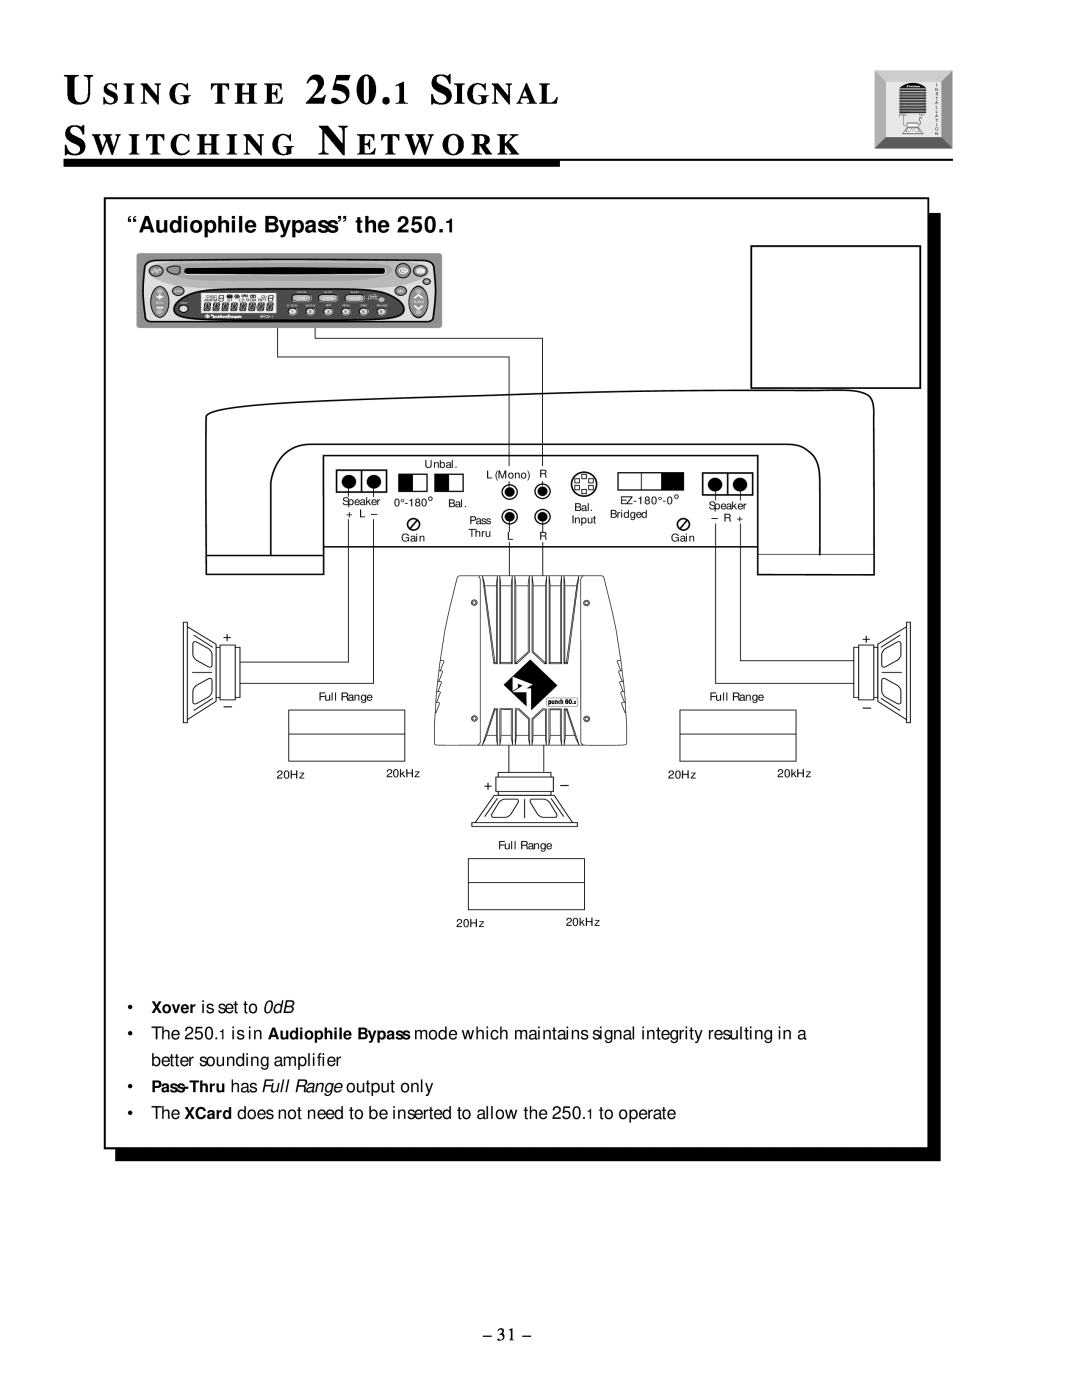 Rockford Fosgate manual U S I N G T H E 250.1 SIGNAL, S W I T C H I N G N E T W O R K, “Audiophile Bypass” the 